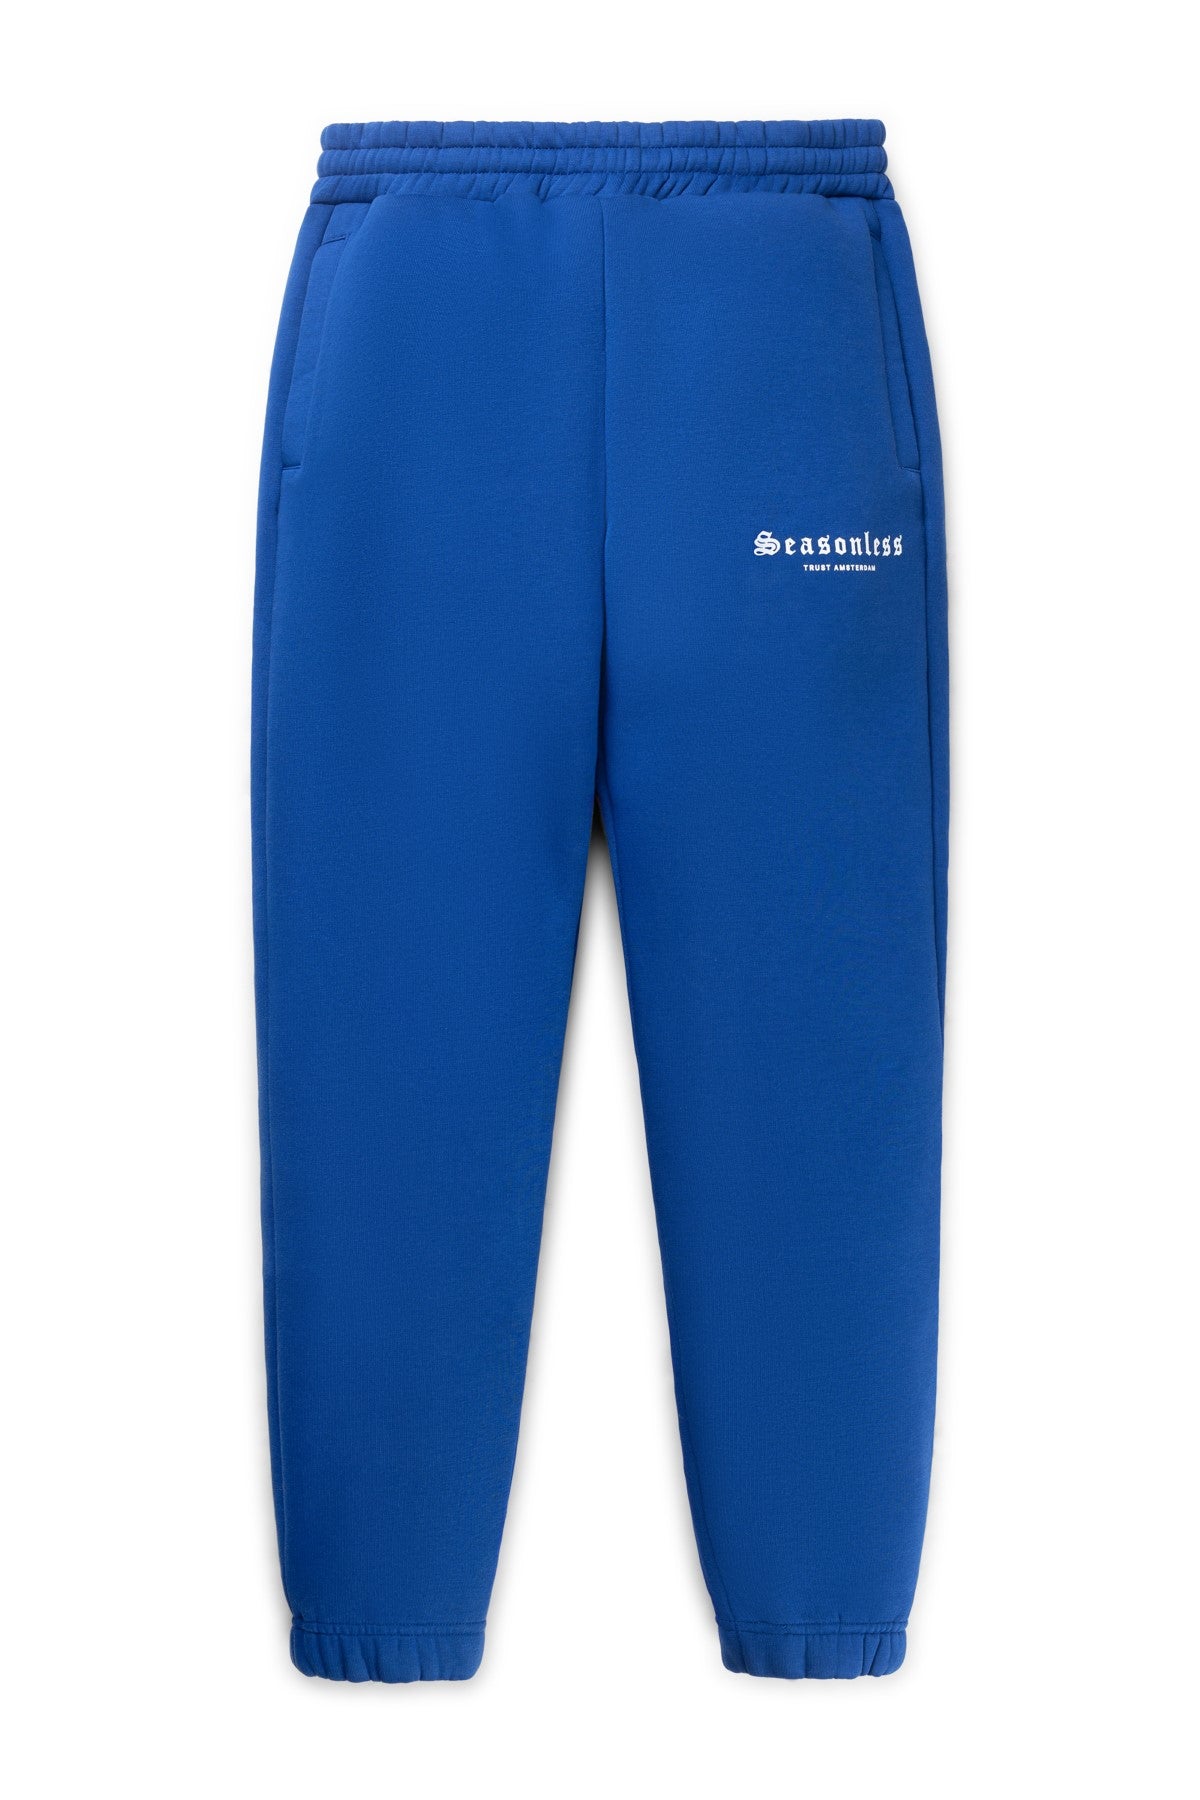 Seasonless Sweatpants - Cobalt Blue